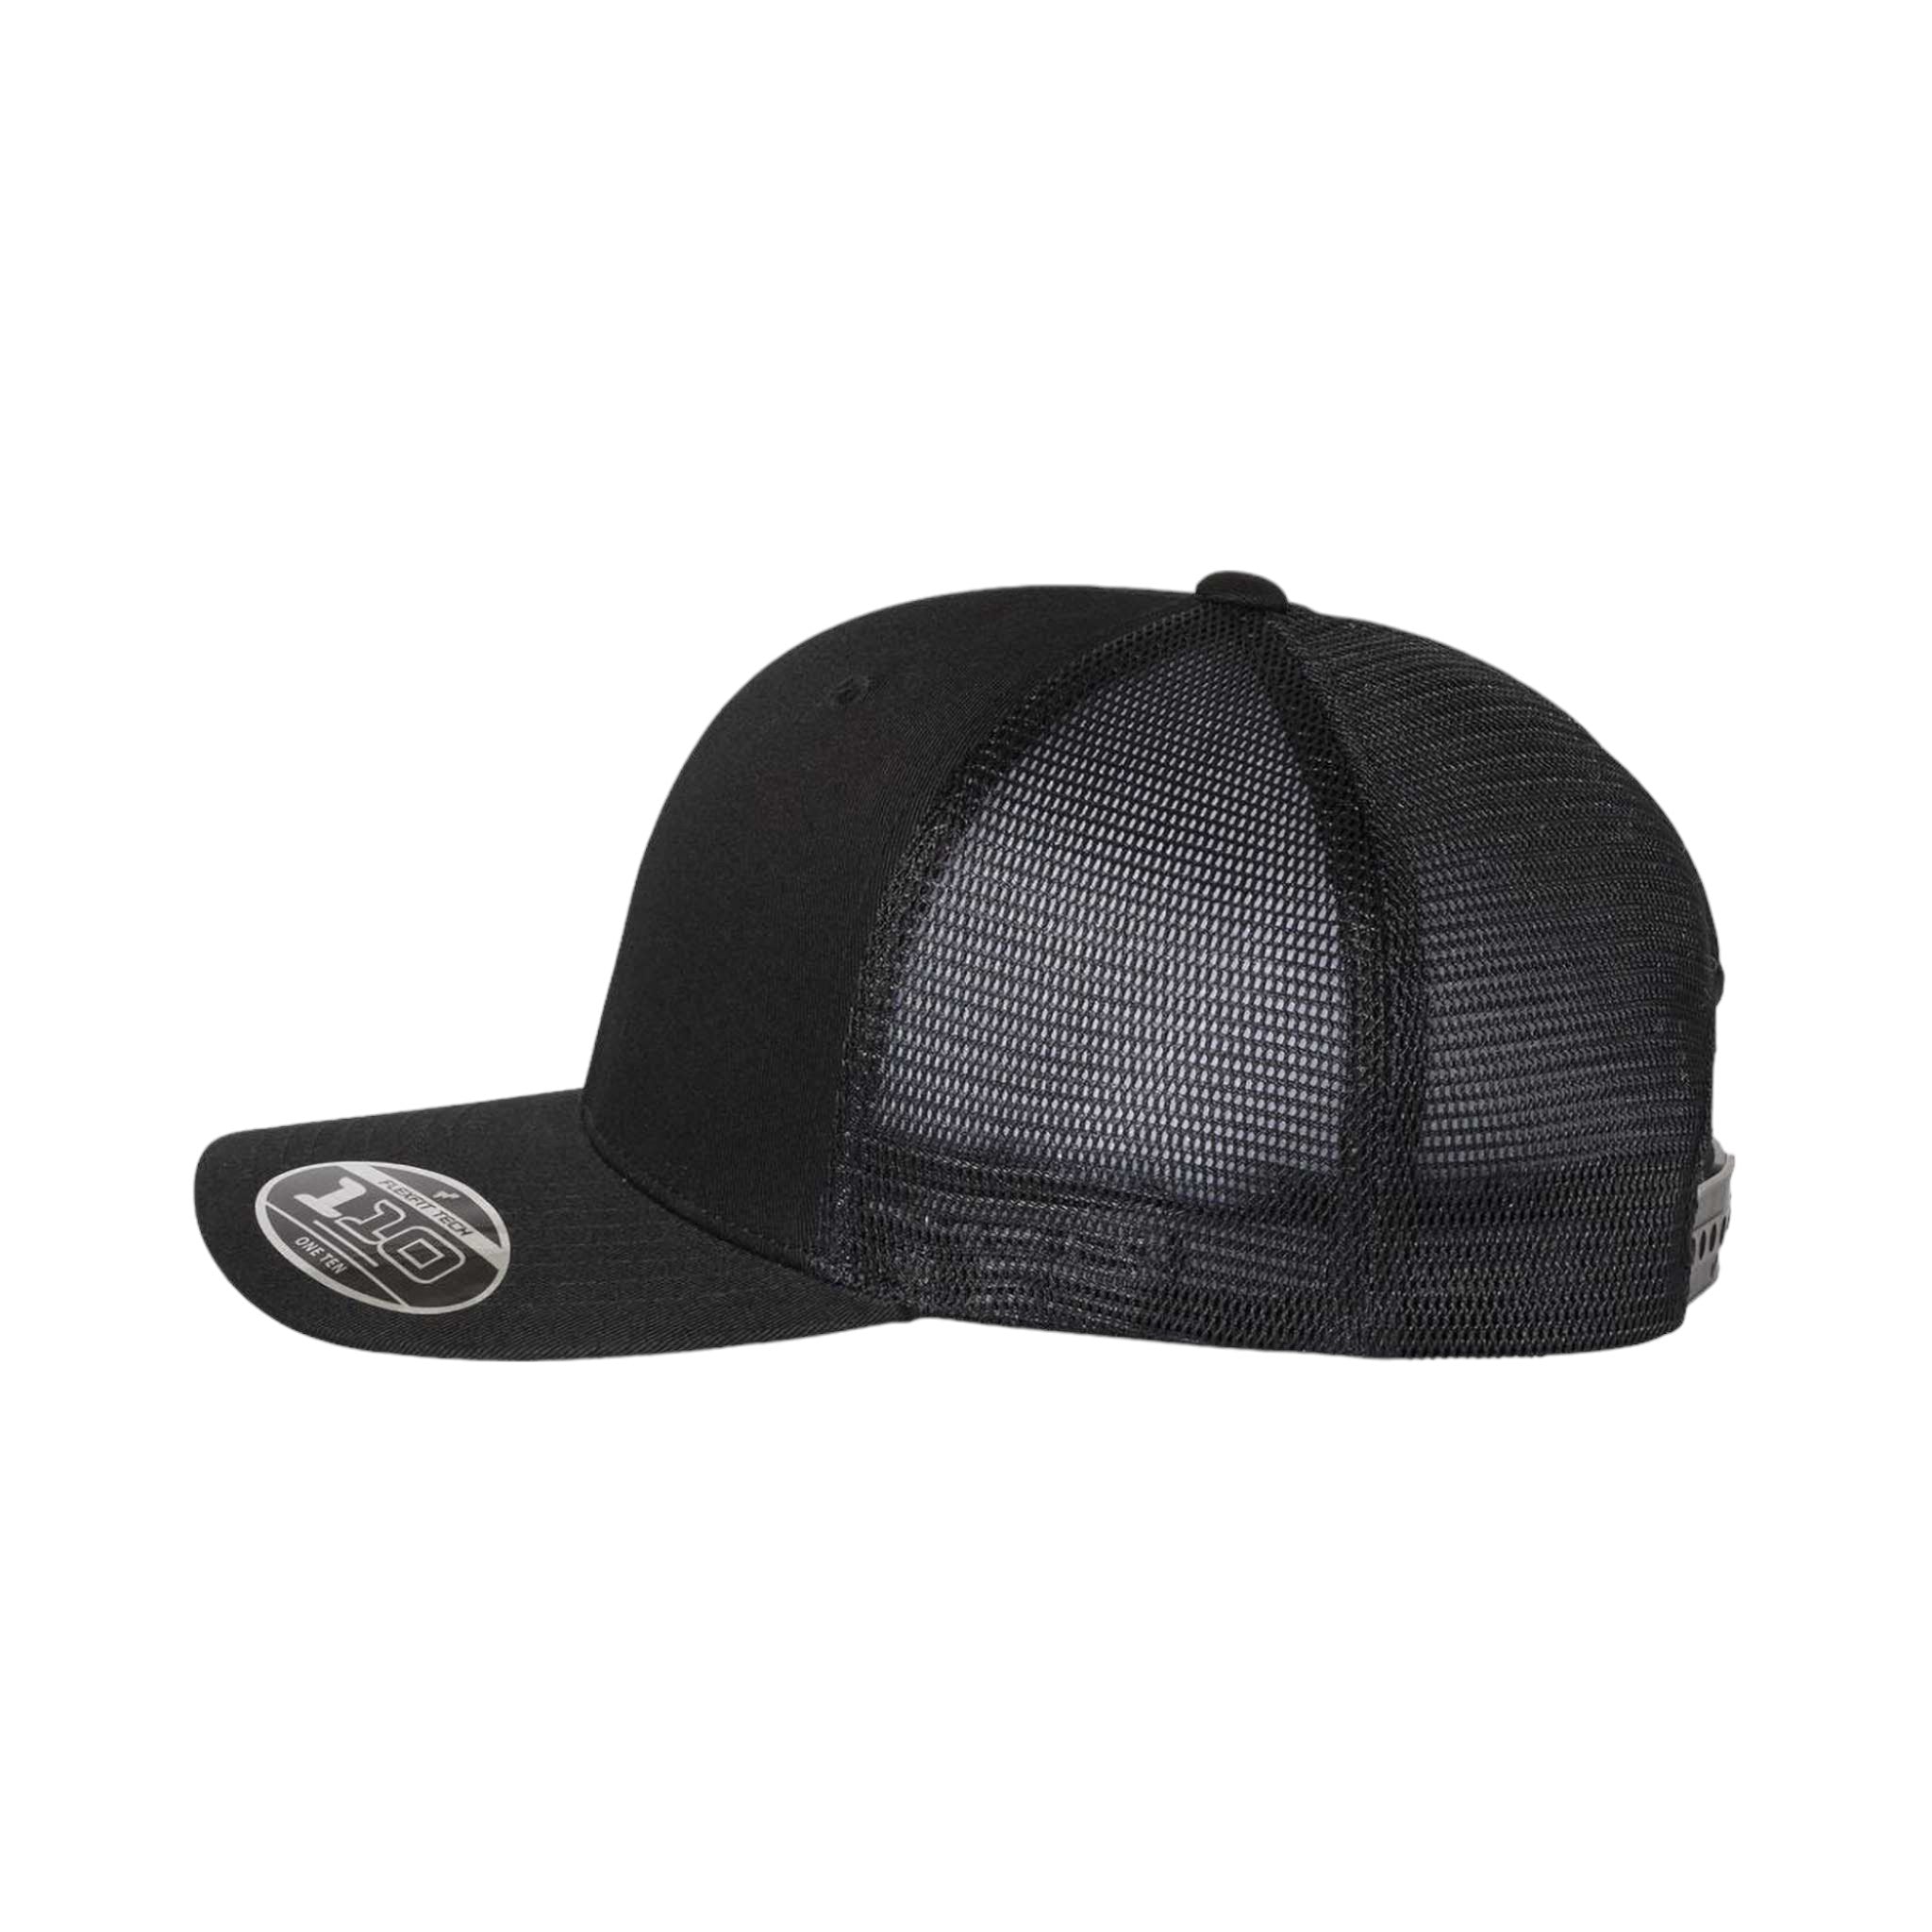 Side view of Flexfit 110M custom hat in black